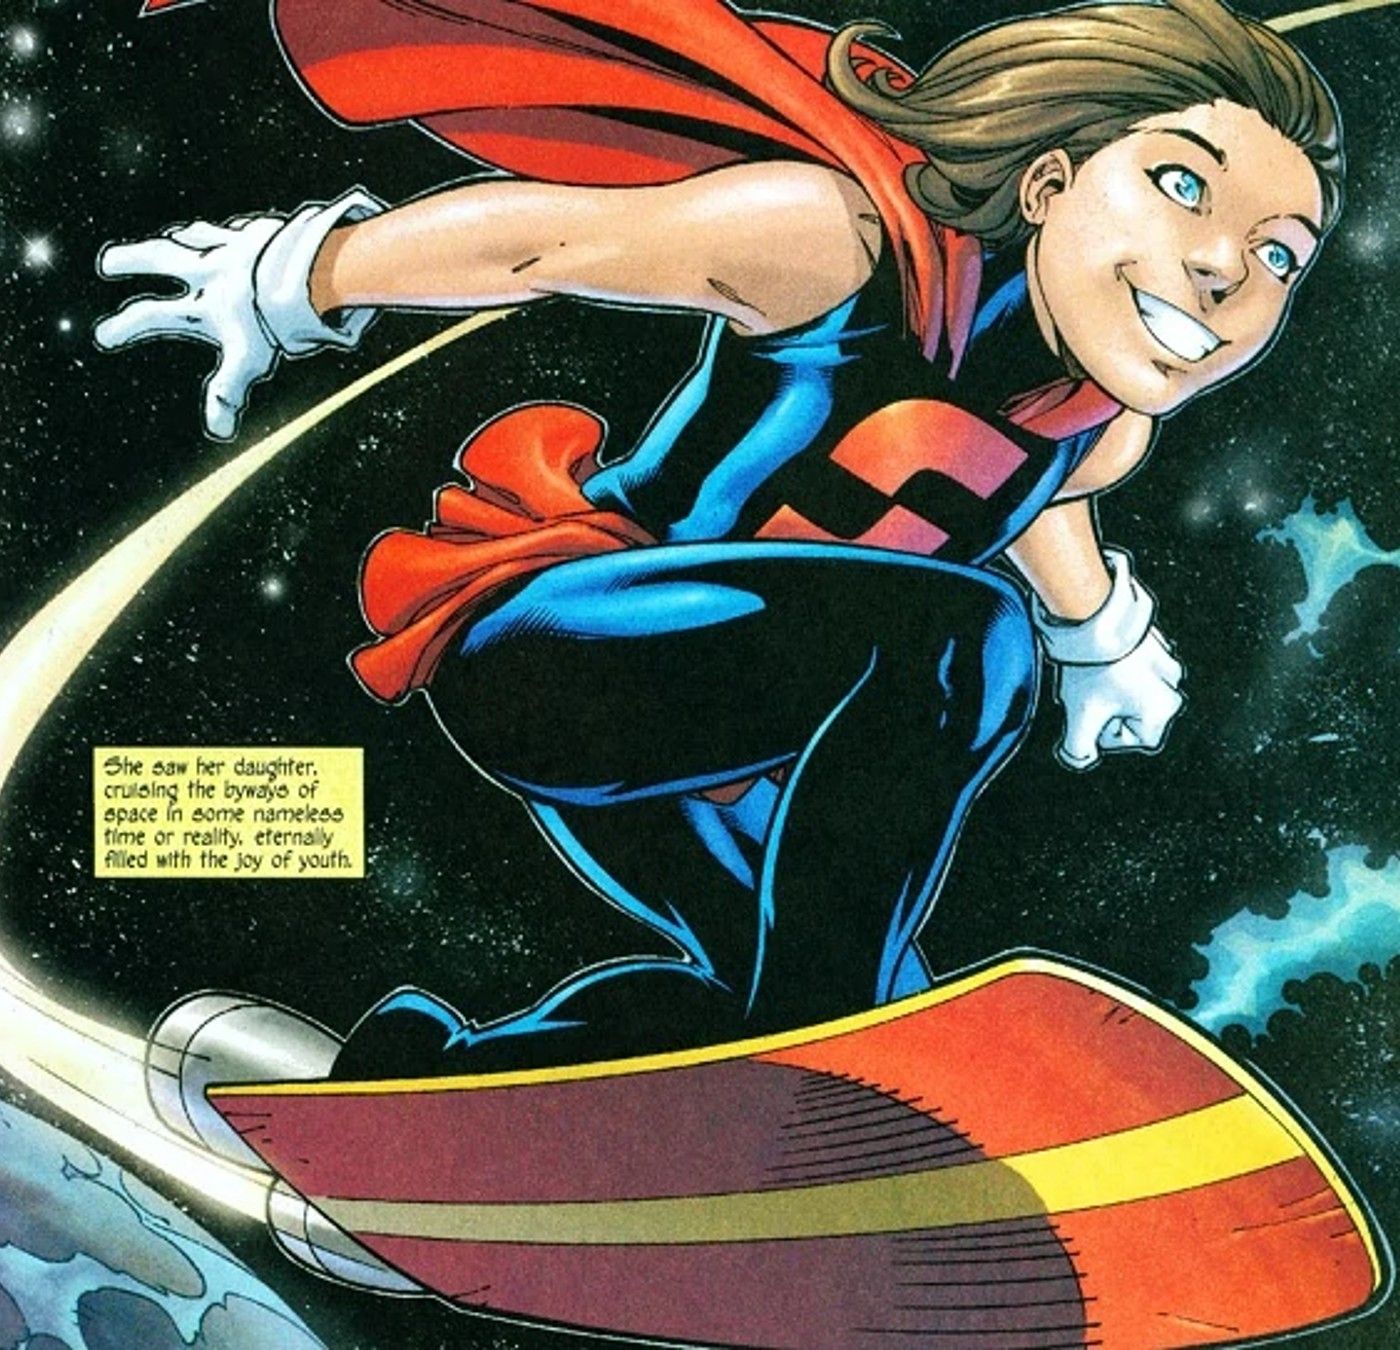 Ariella Kent is Supergirl